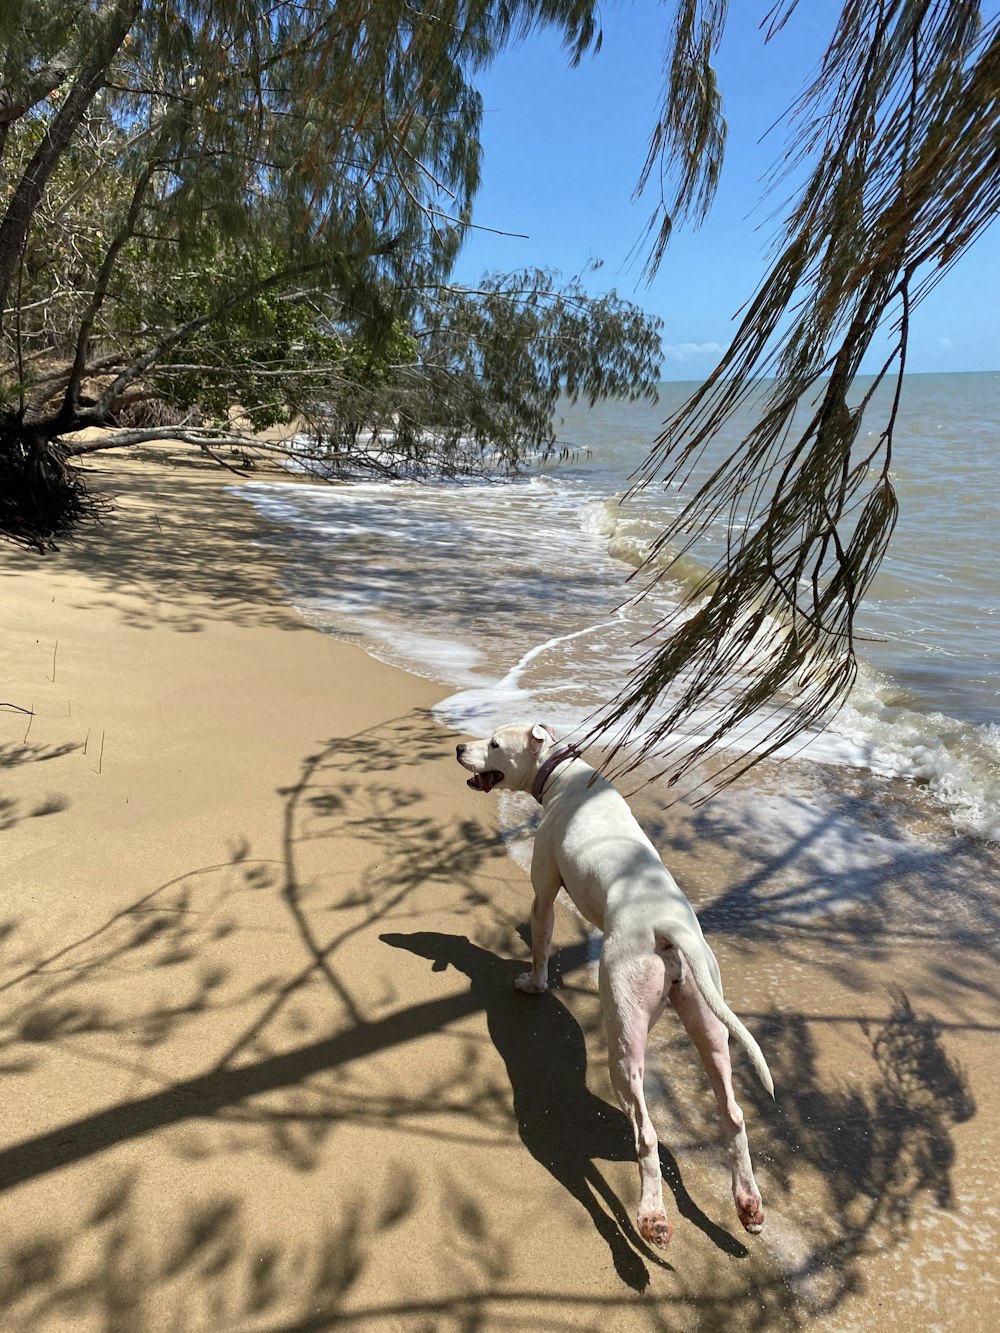 a dog on a beach near the water